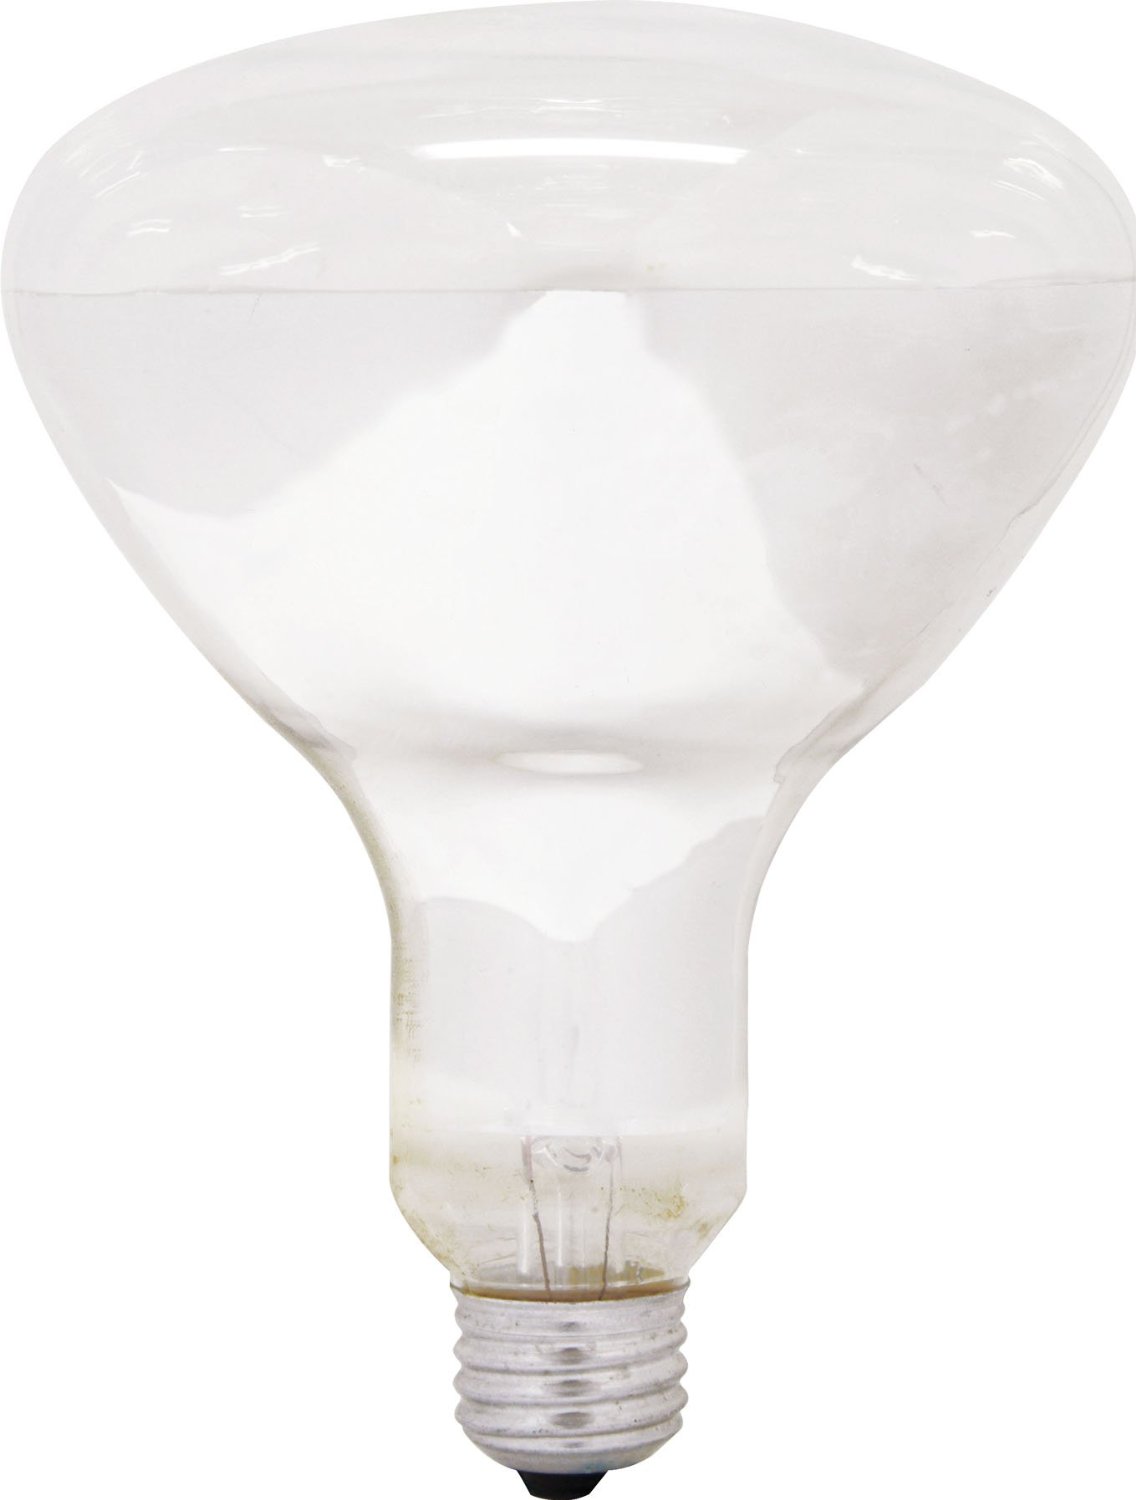 GE Lighting 47683 Indoor Reflector R40 Floodlight Bulb, Soft White, 65W